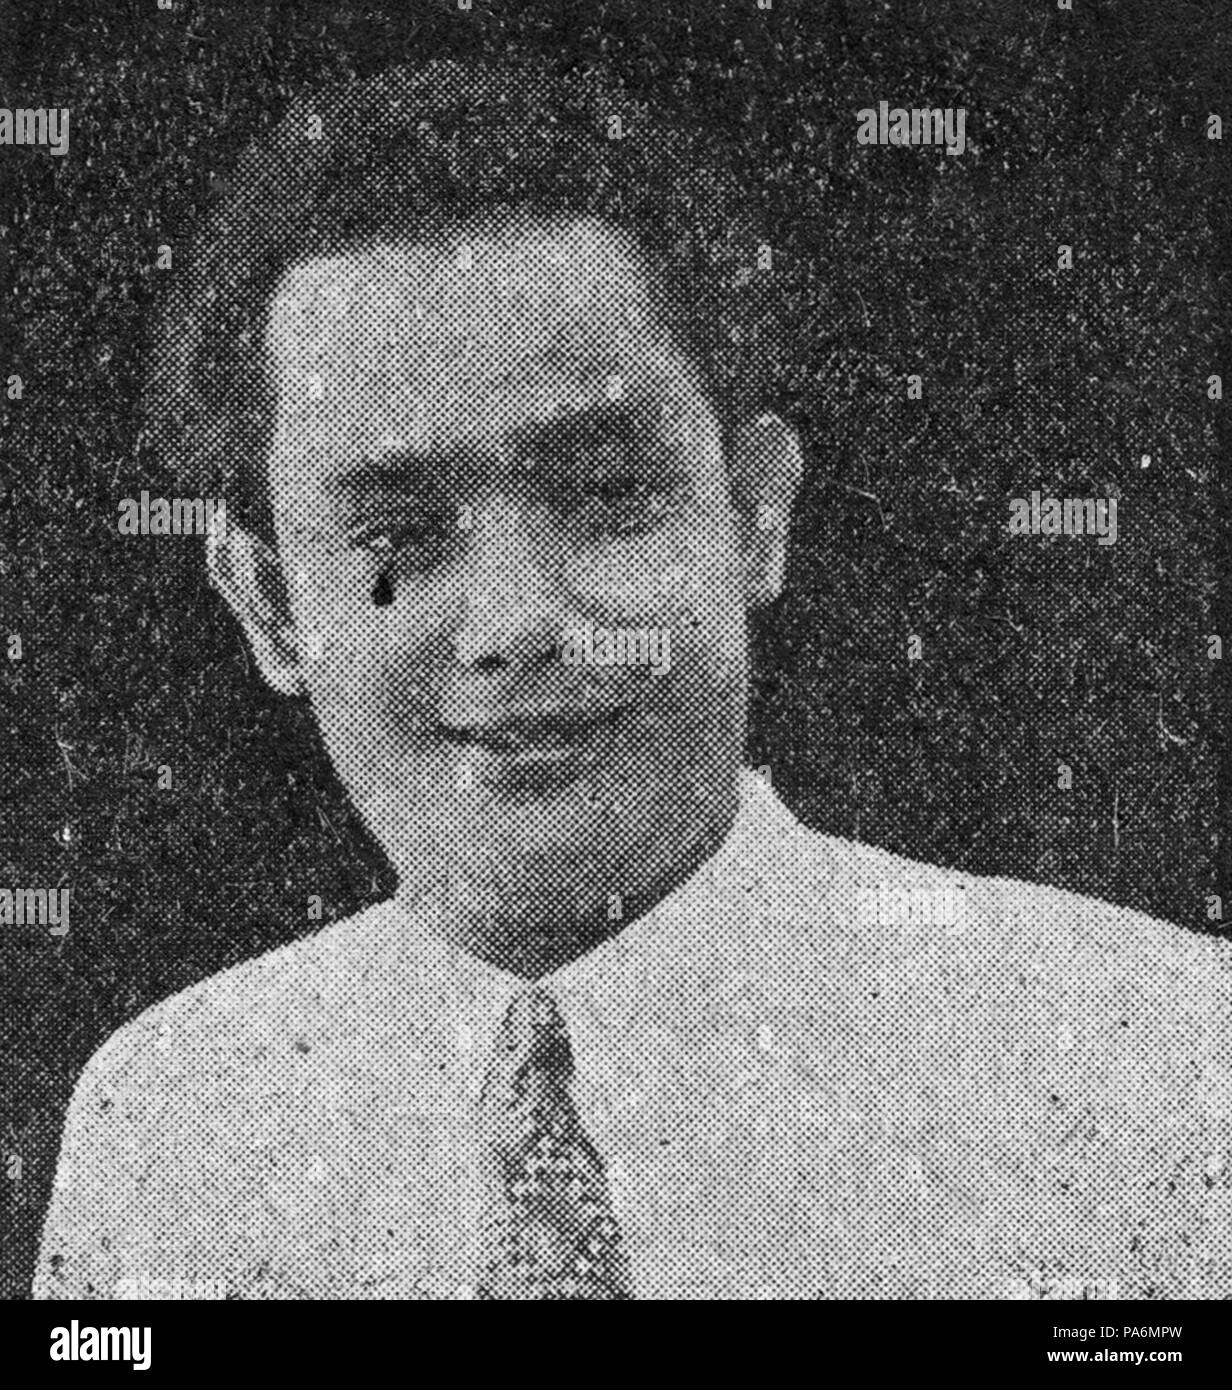 225 S. Abdullah, His Master's Voice Advertisement, Surabaya (c 1930s) Stock Photo